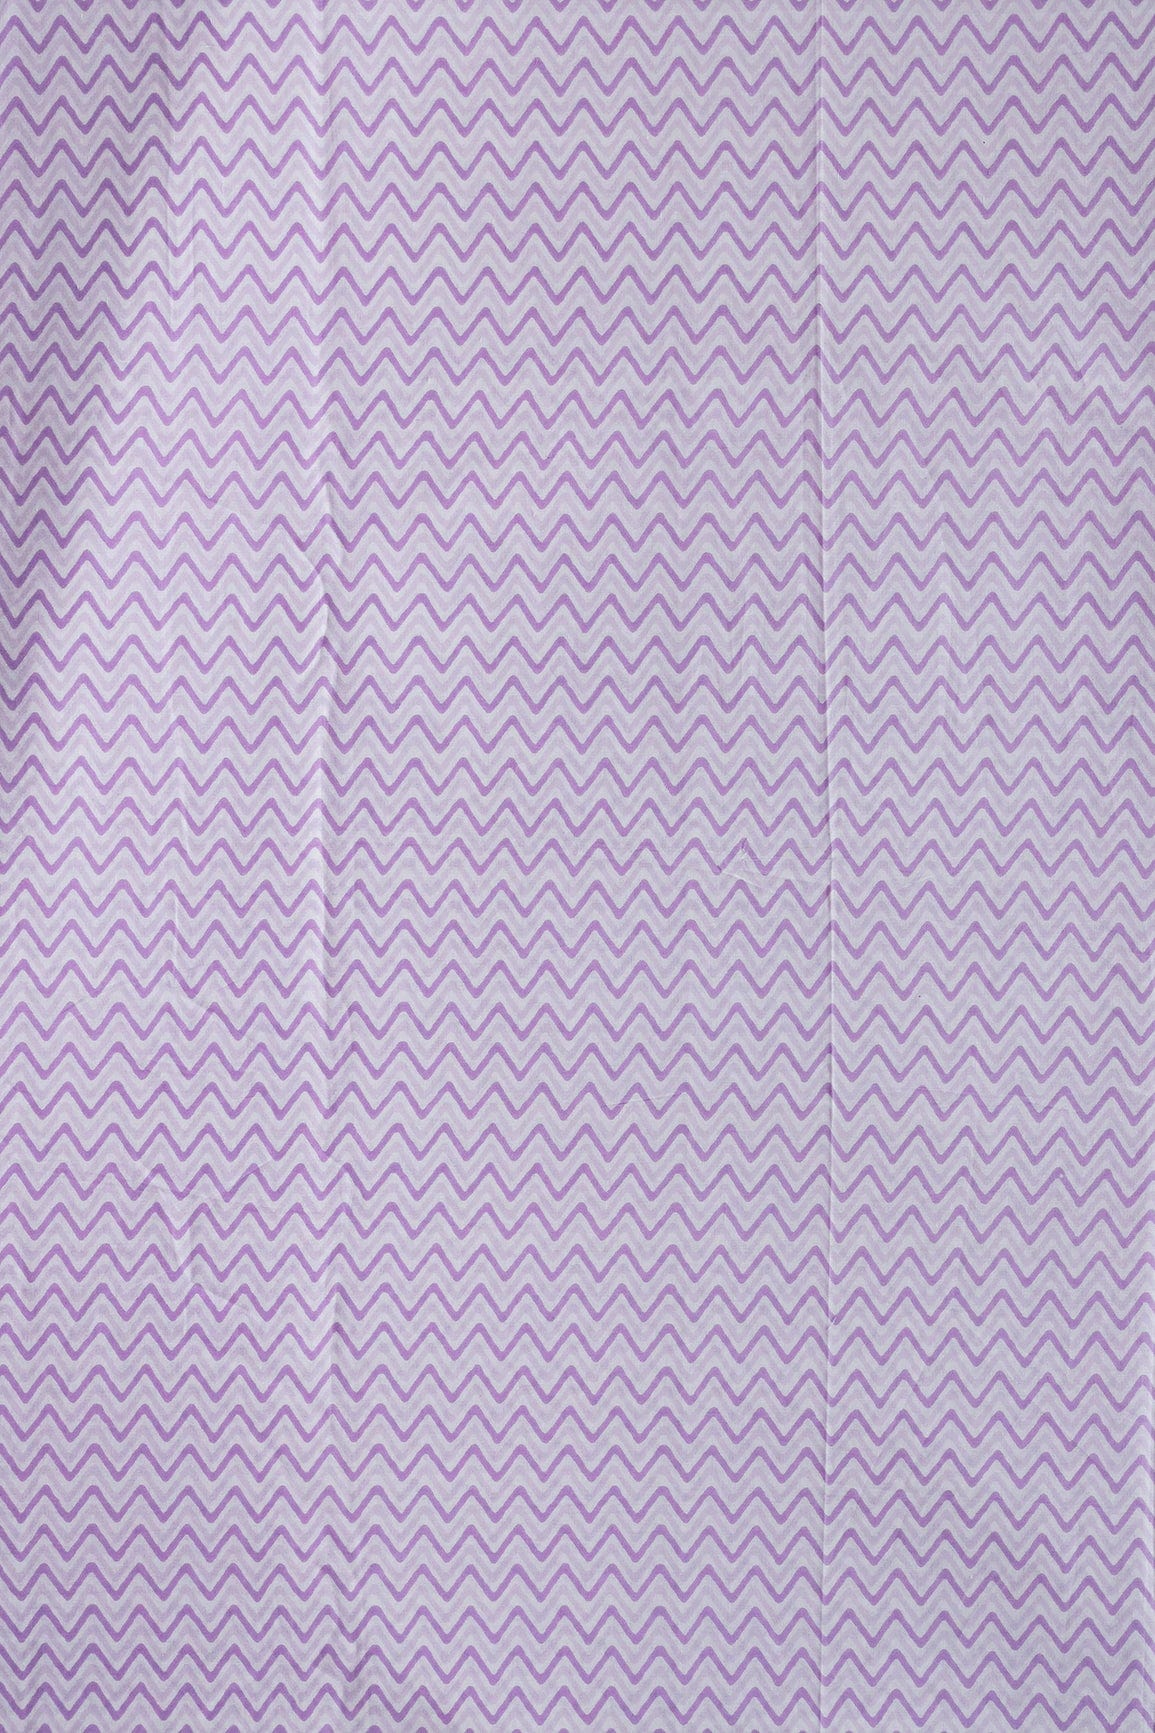 doeraa Prints Lavender Chevron Print On White Pure Cotton Fabric